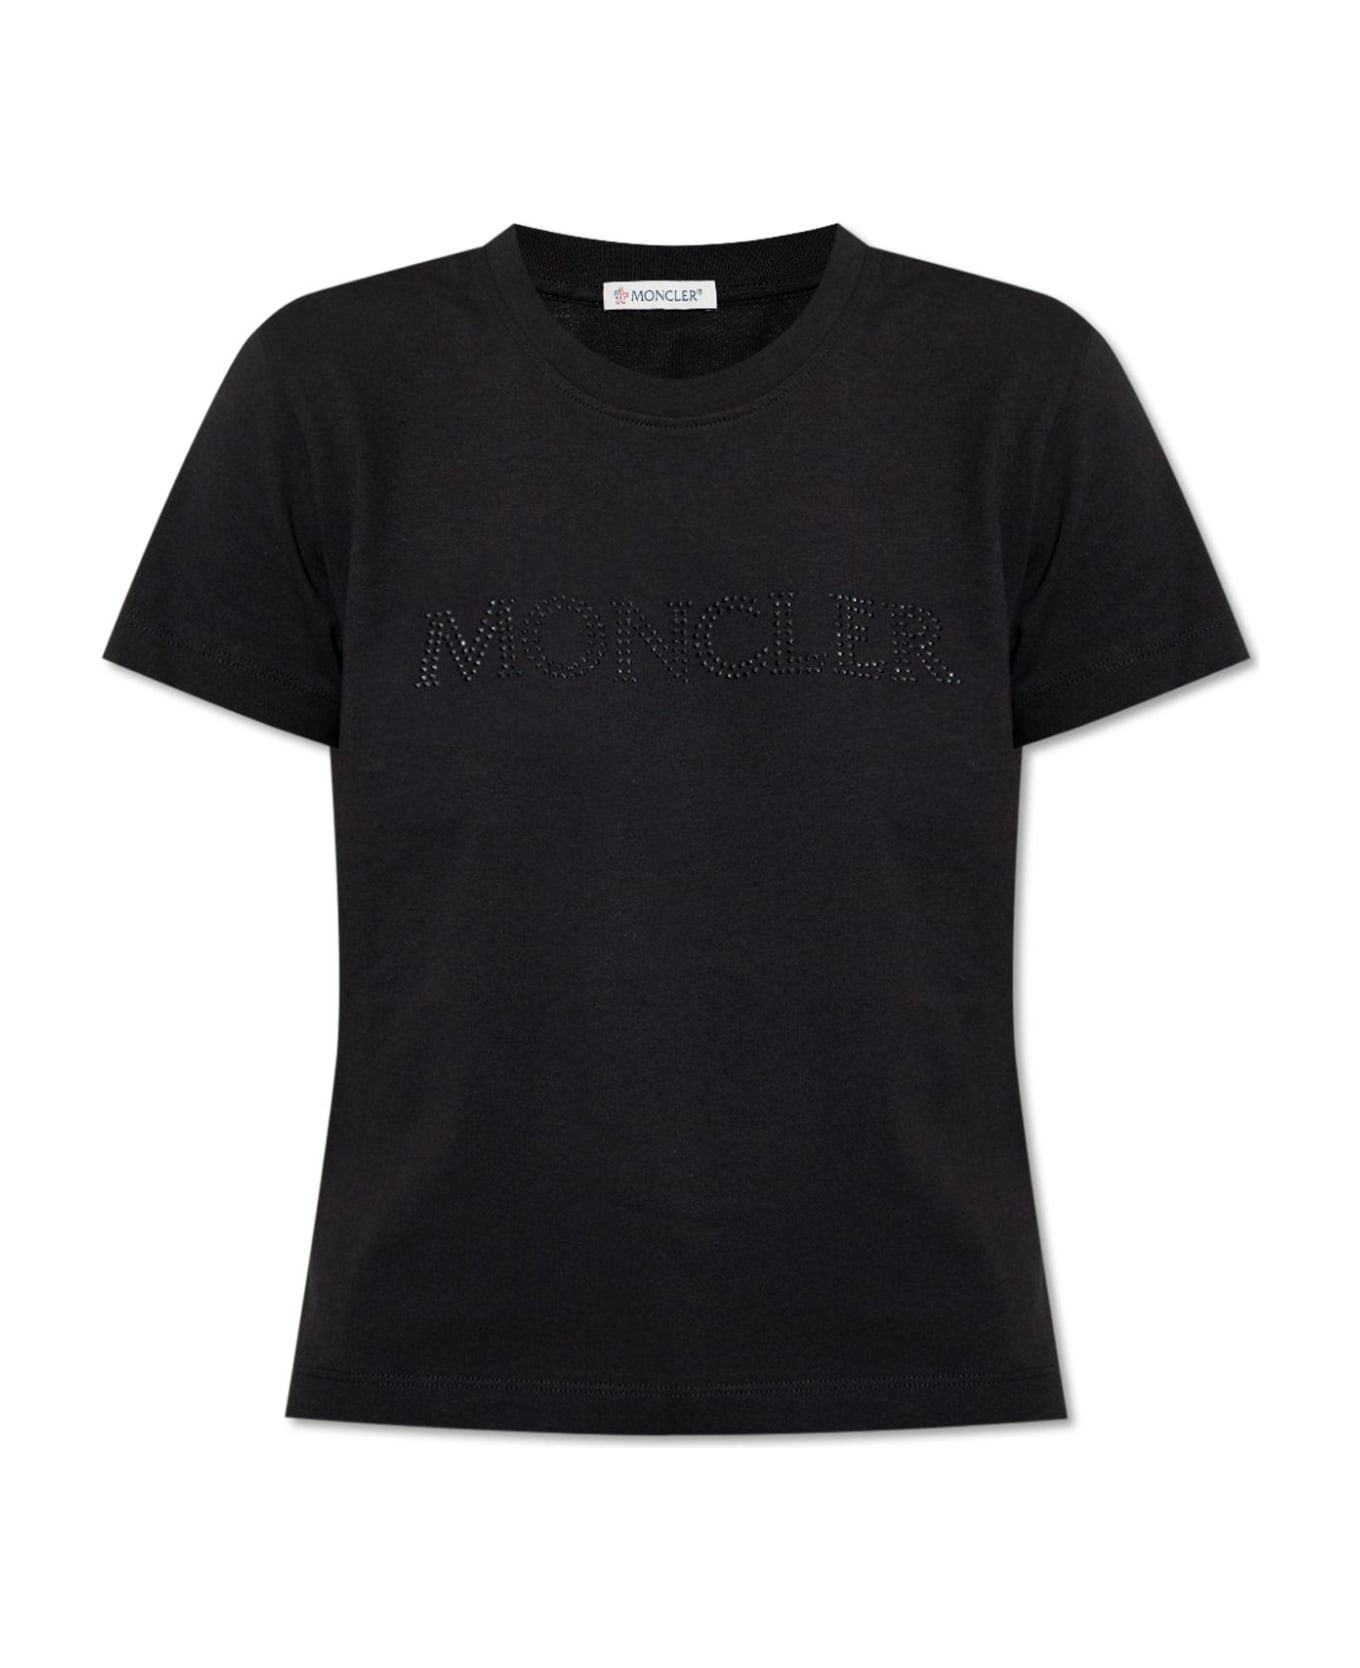 Moncler T-shirt With Logo - Black